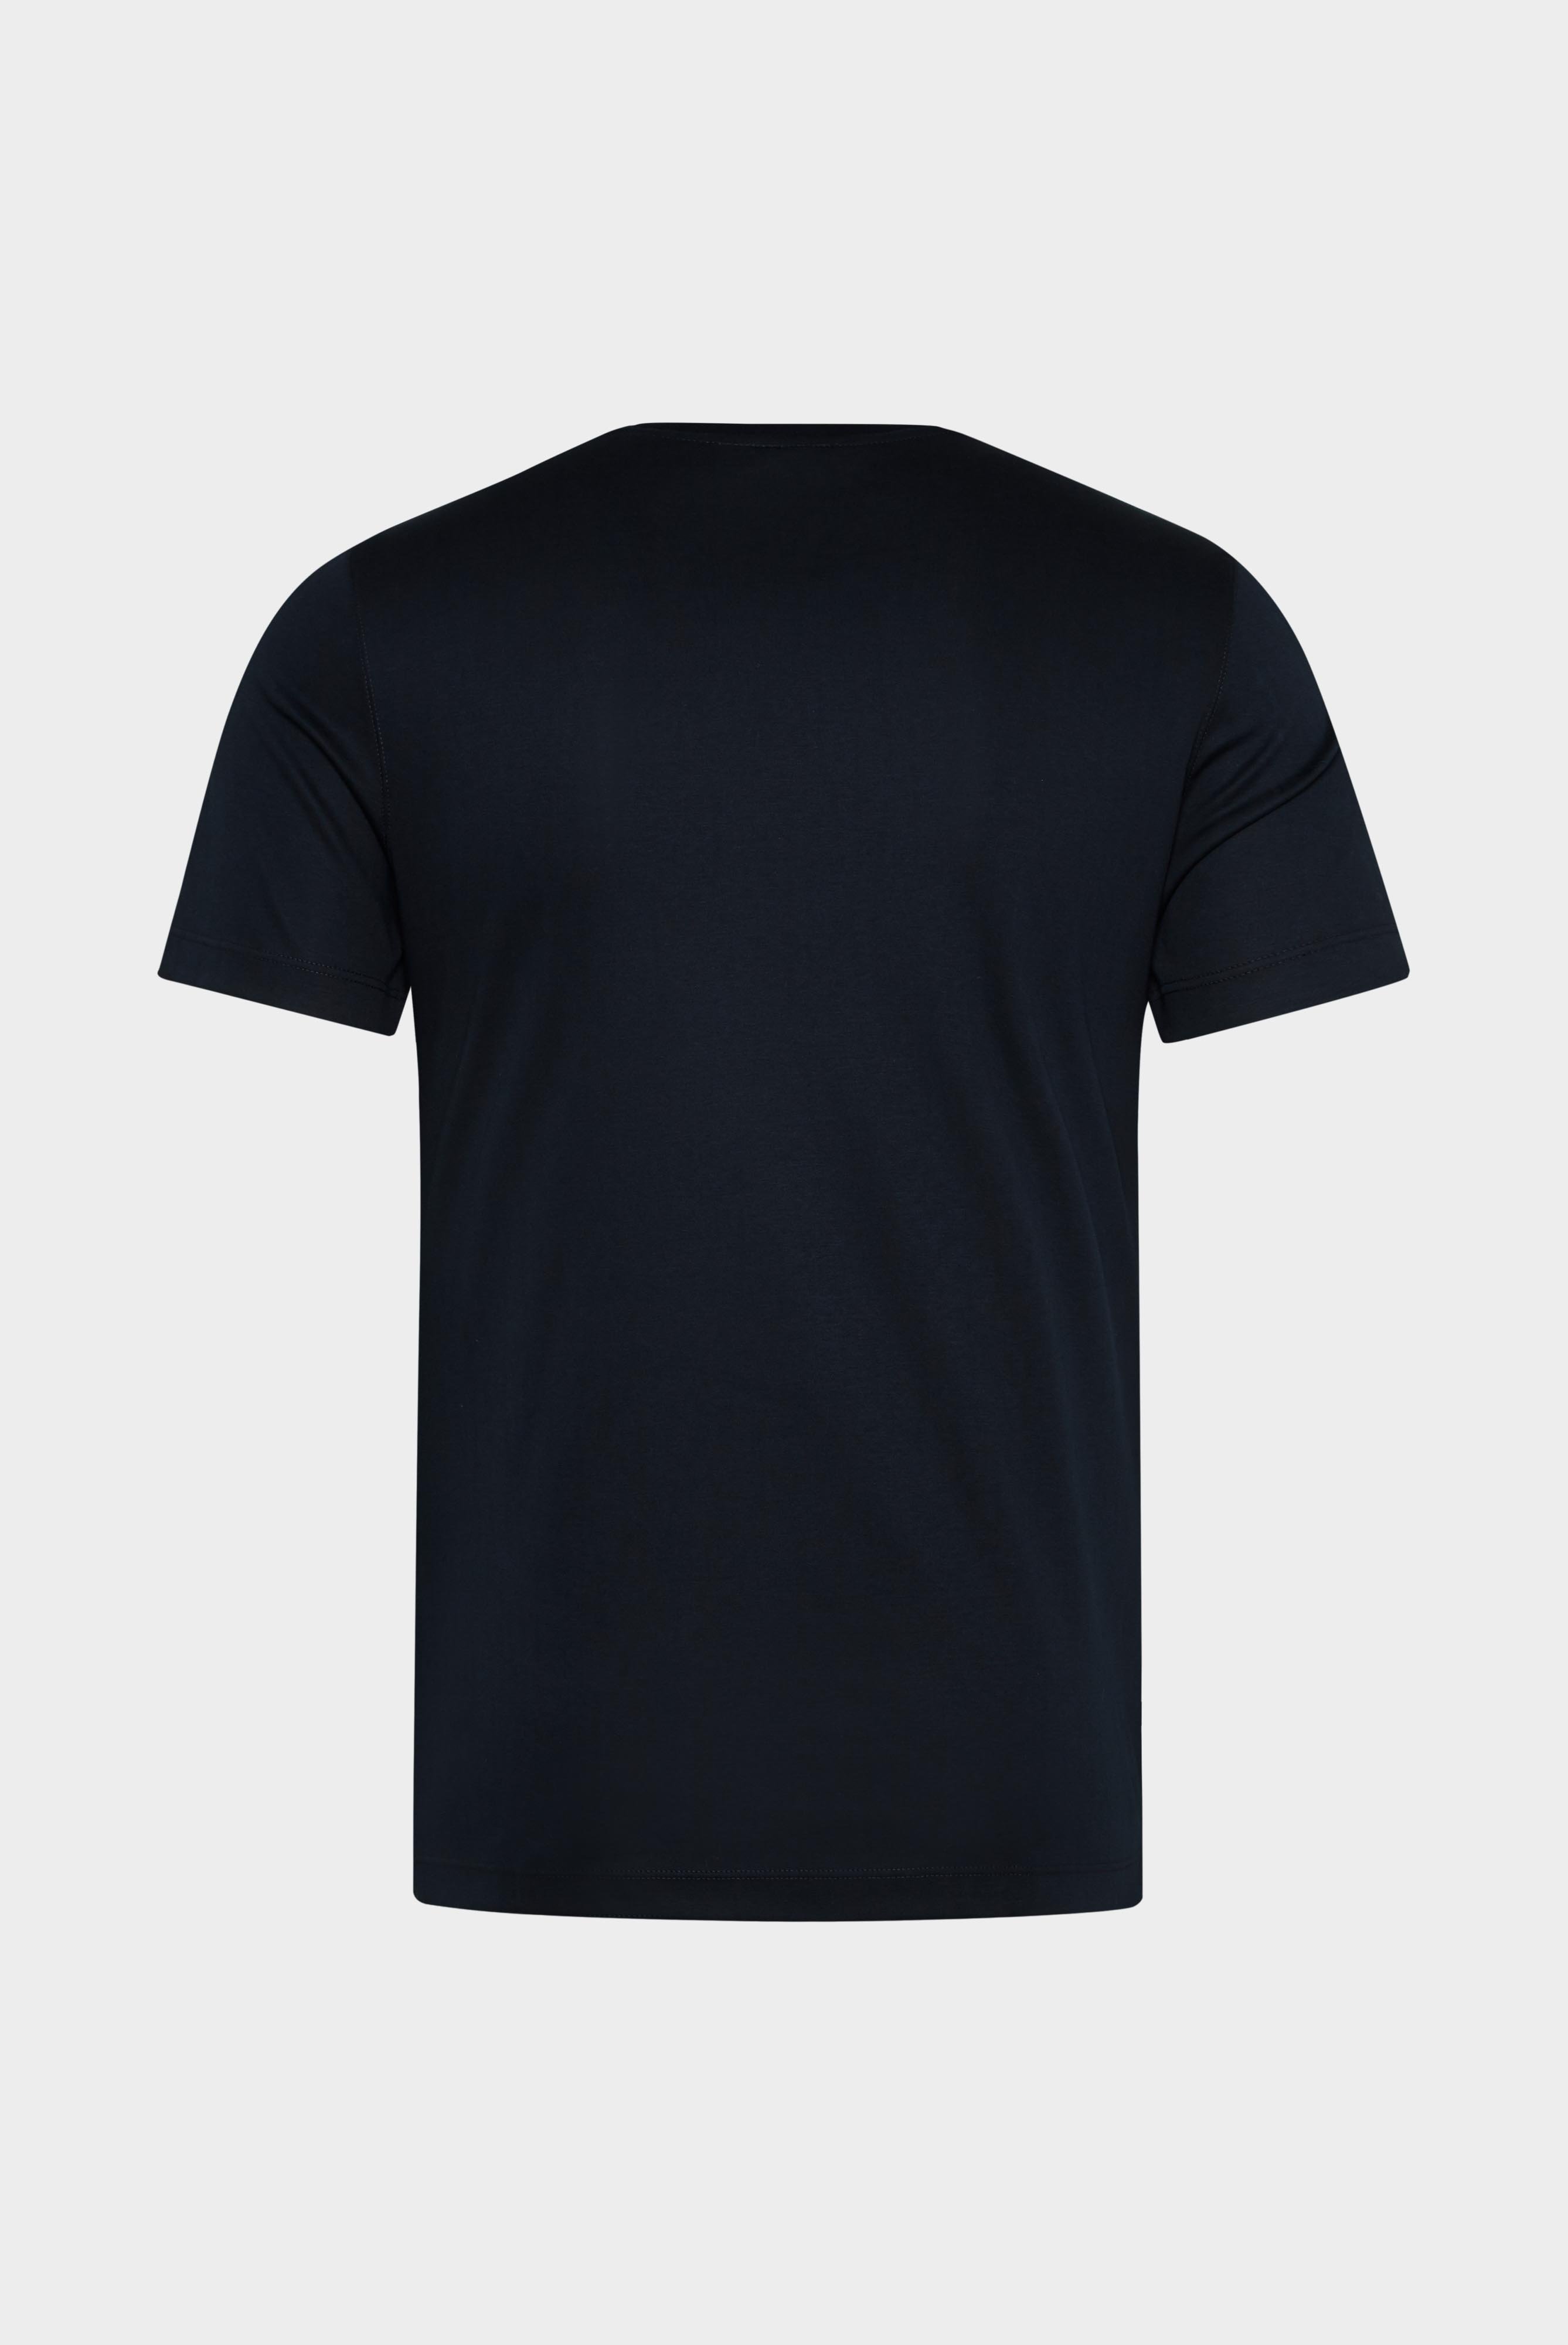 T-Shirts+Rundhals Jersey T-Shirt Slim Fit+20.1717.UX.180031.790.XXL